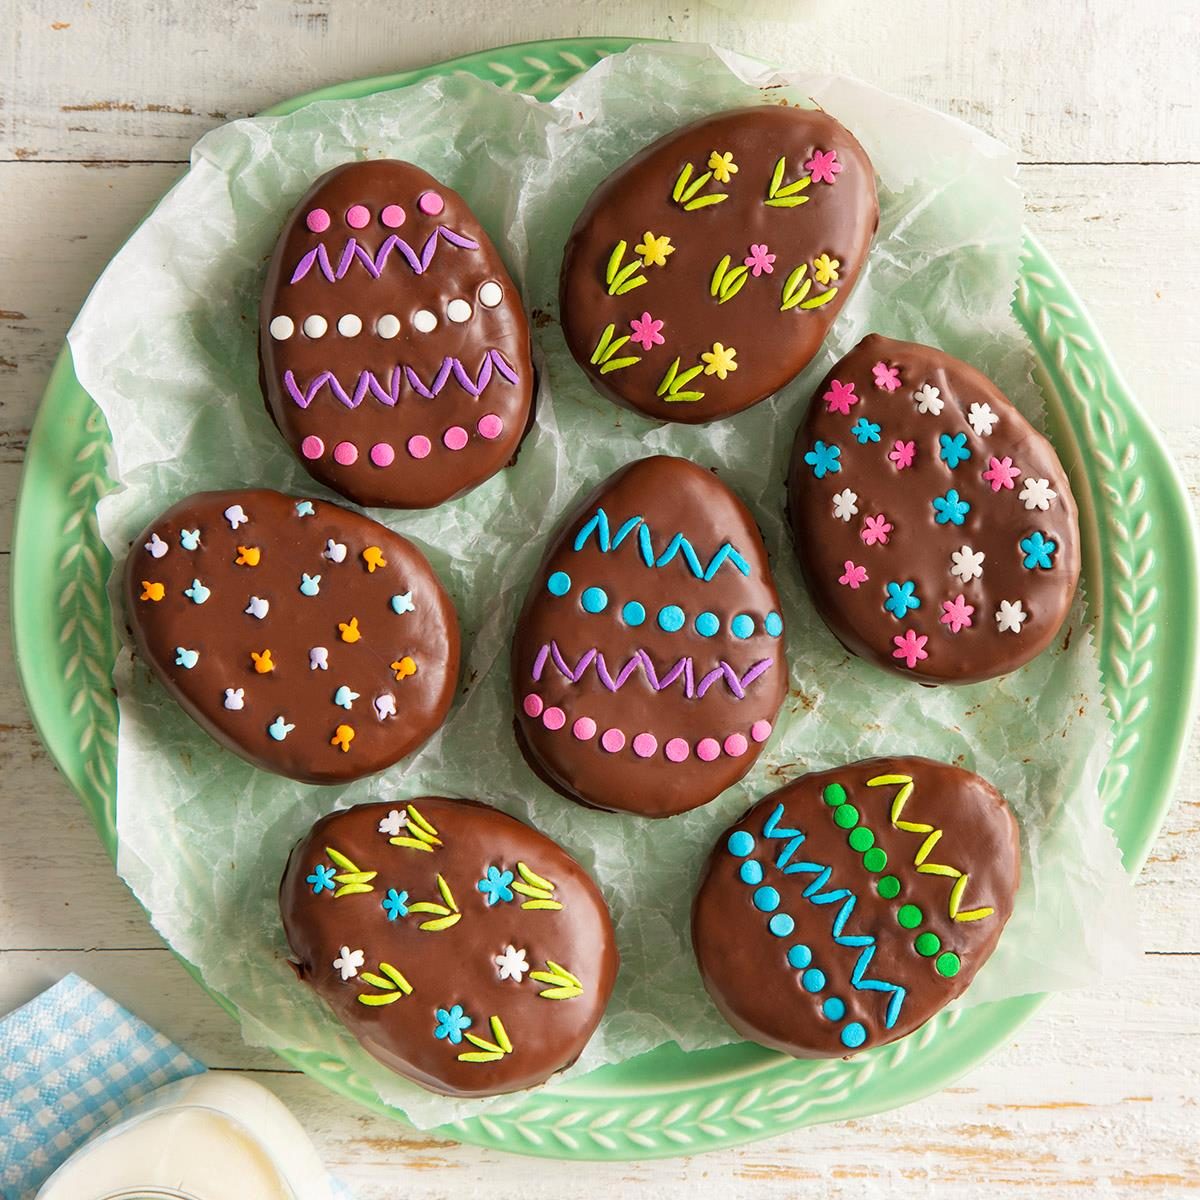 https://www.tasteofhome.com/wp-content/uploads/2018/01/Homemade-Chocolate-Easter-Eggs_EXPS_FT22_17503_F_0322_1.jpg?fit=700%2C1024